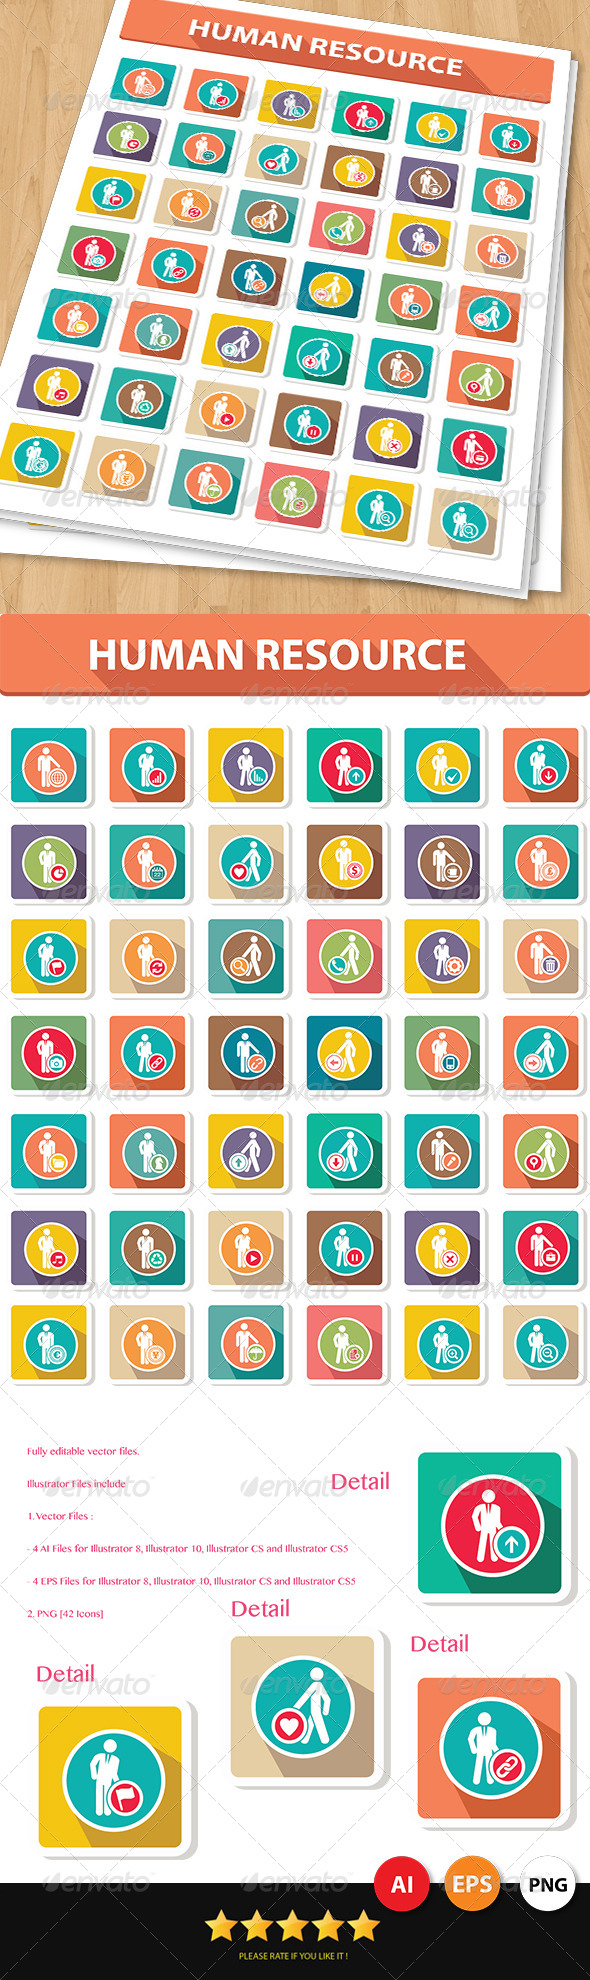 42 Human Resource Icons